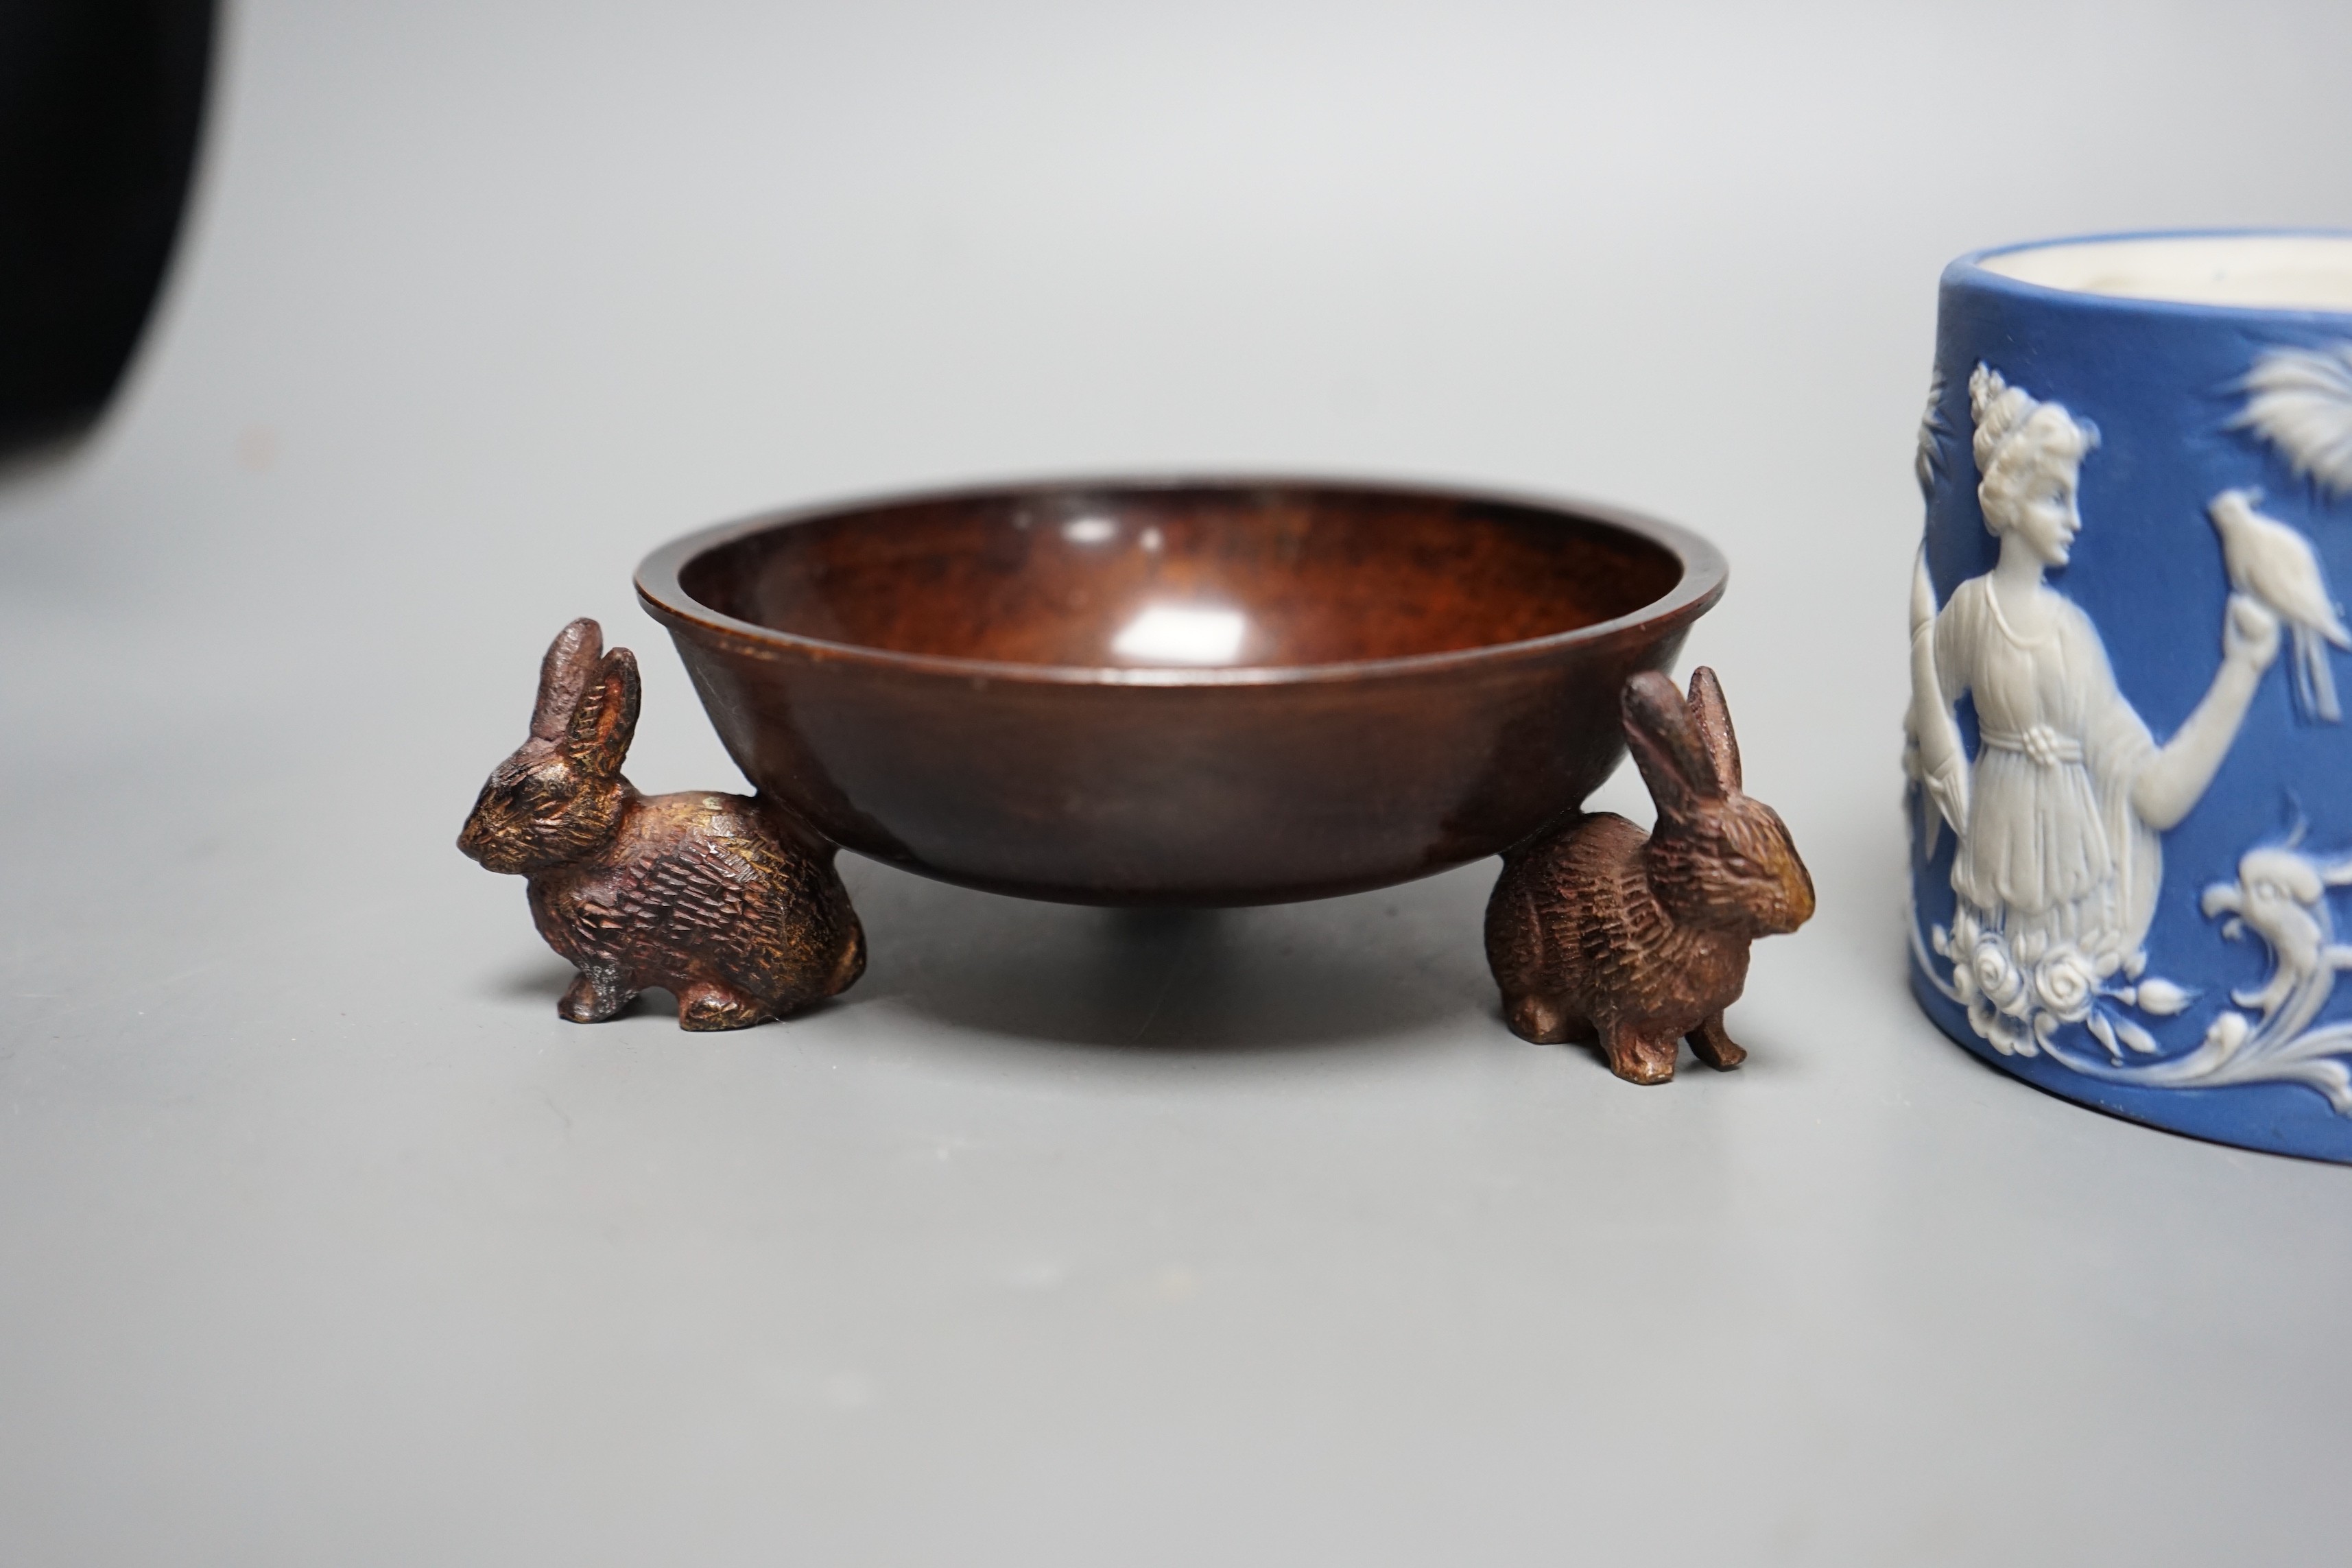 A Crown Devon Fieldings musical mug, a bronze tripod dish and a jasper pot